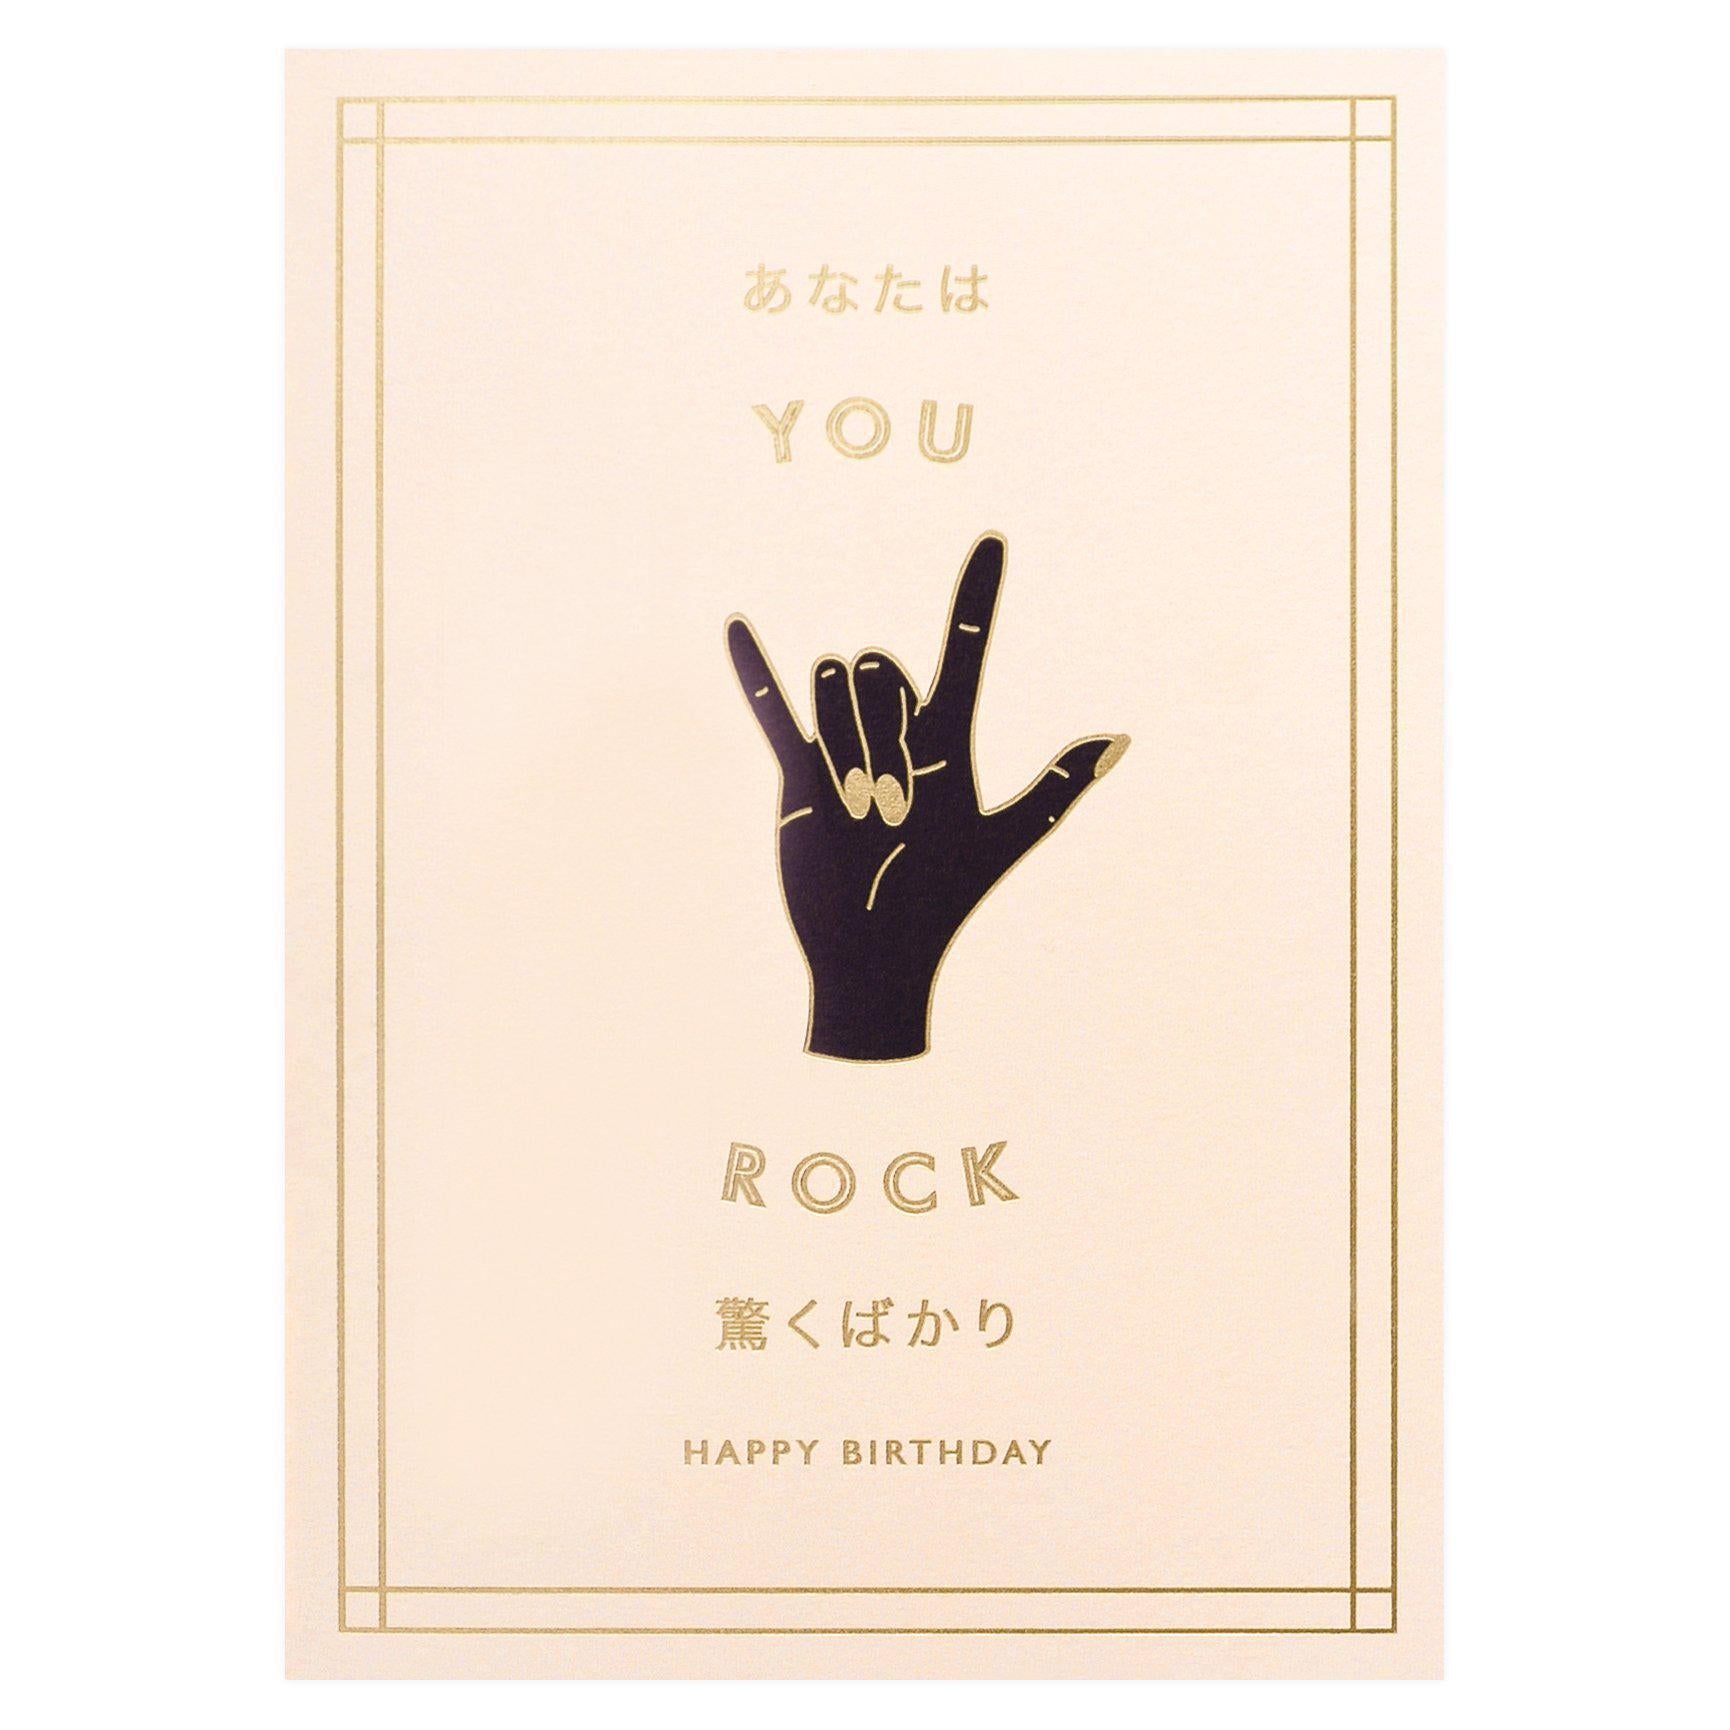 À L'aise You Rock Birthday Card 